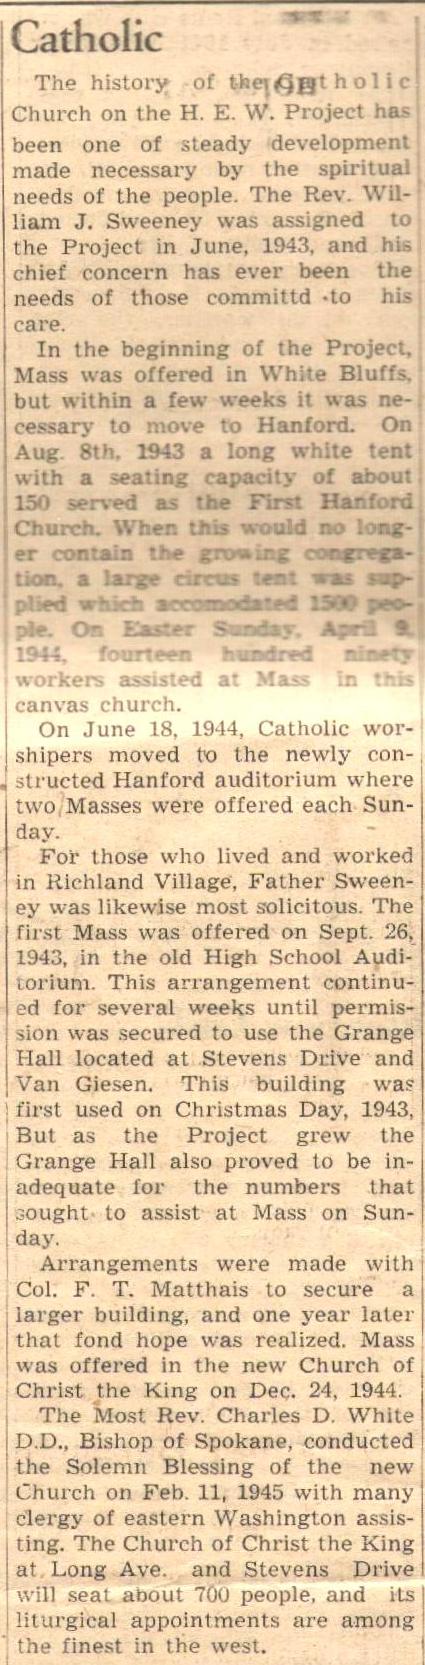 9/3/45 Villager - Page 8 ~ Catholic